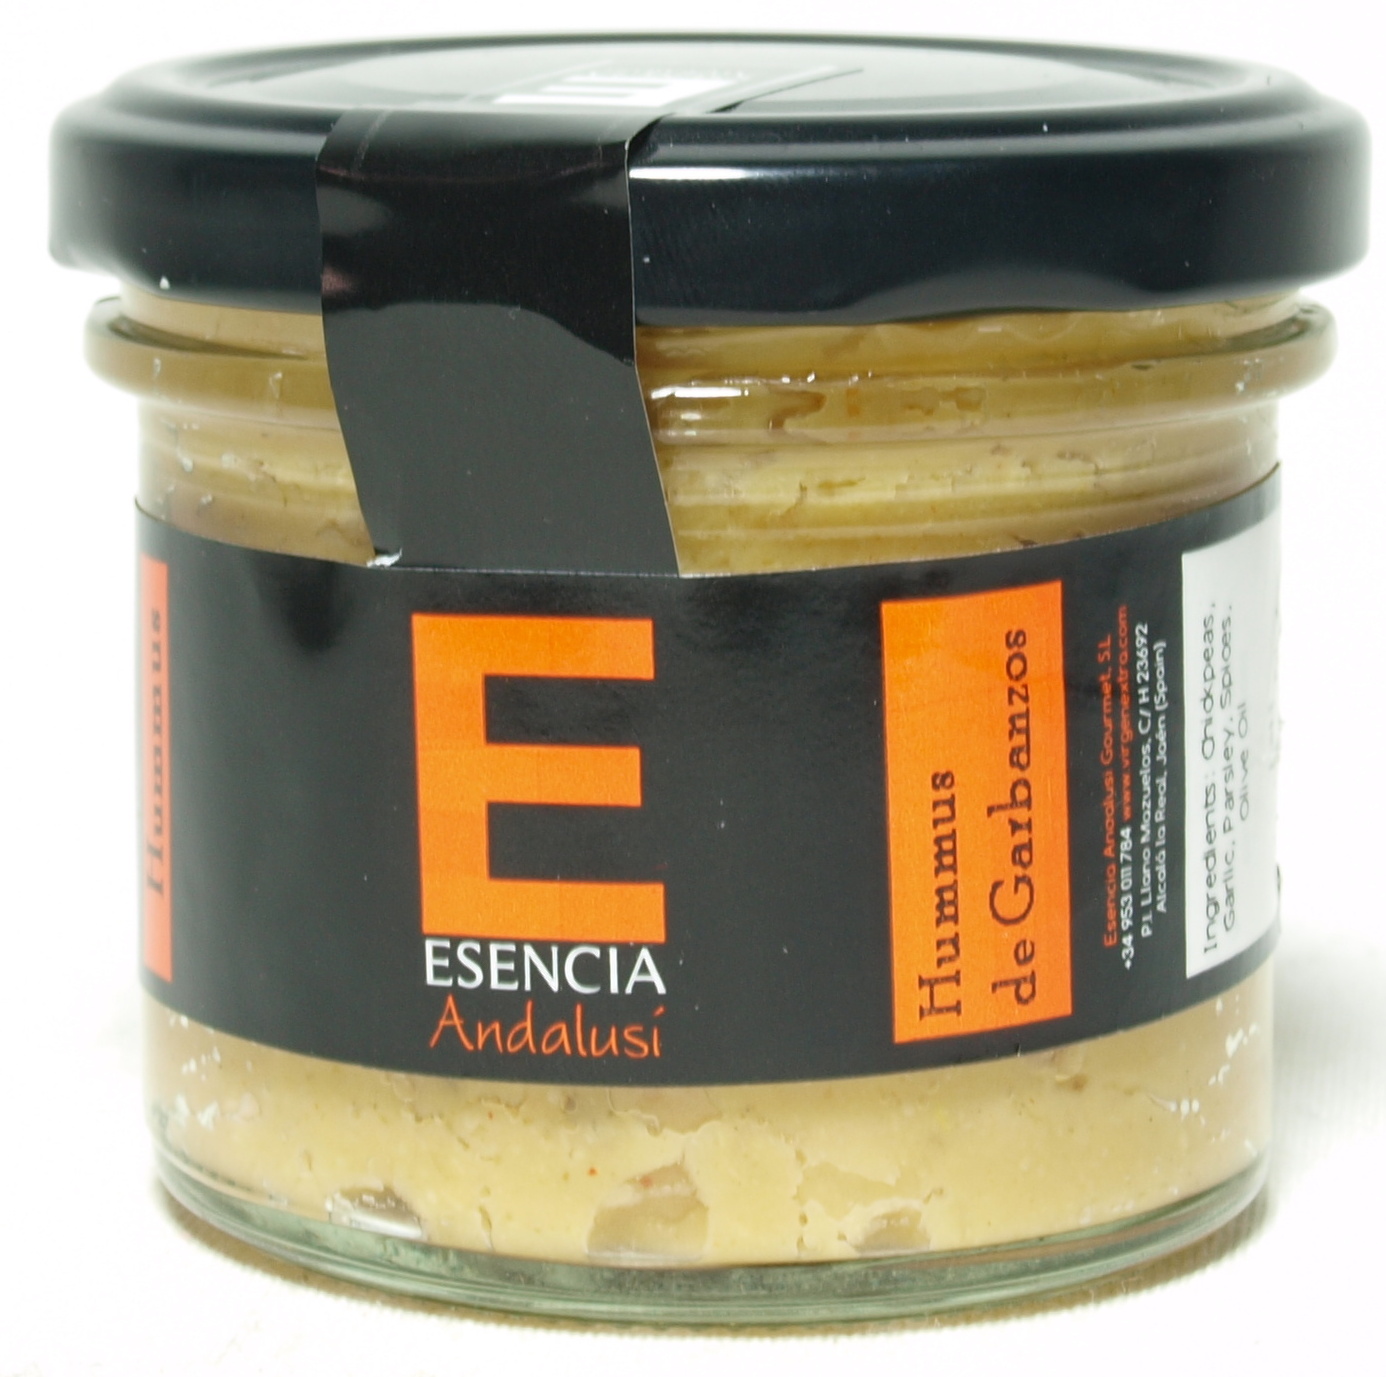 Hummus all'essenza andalusa